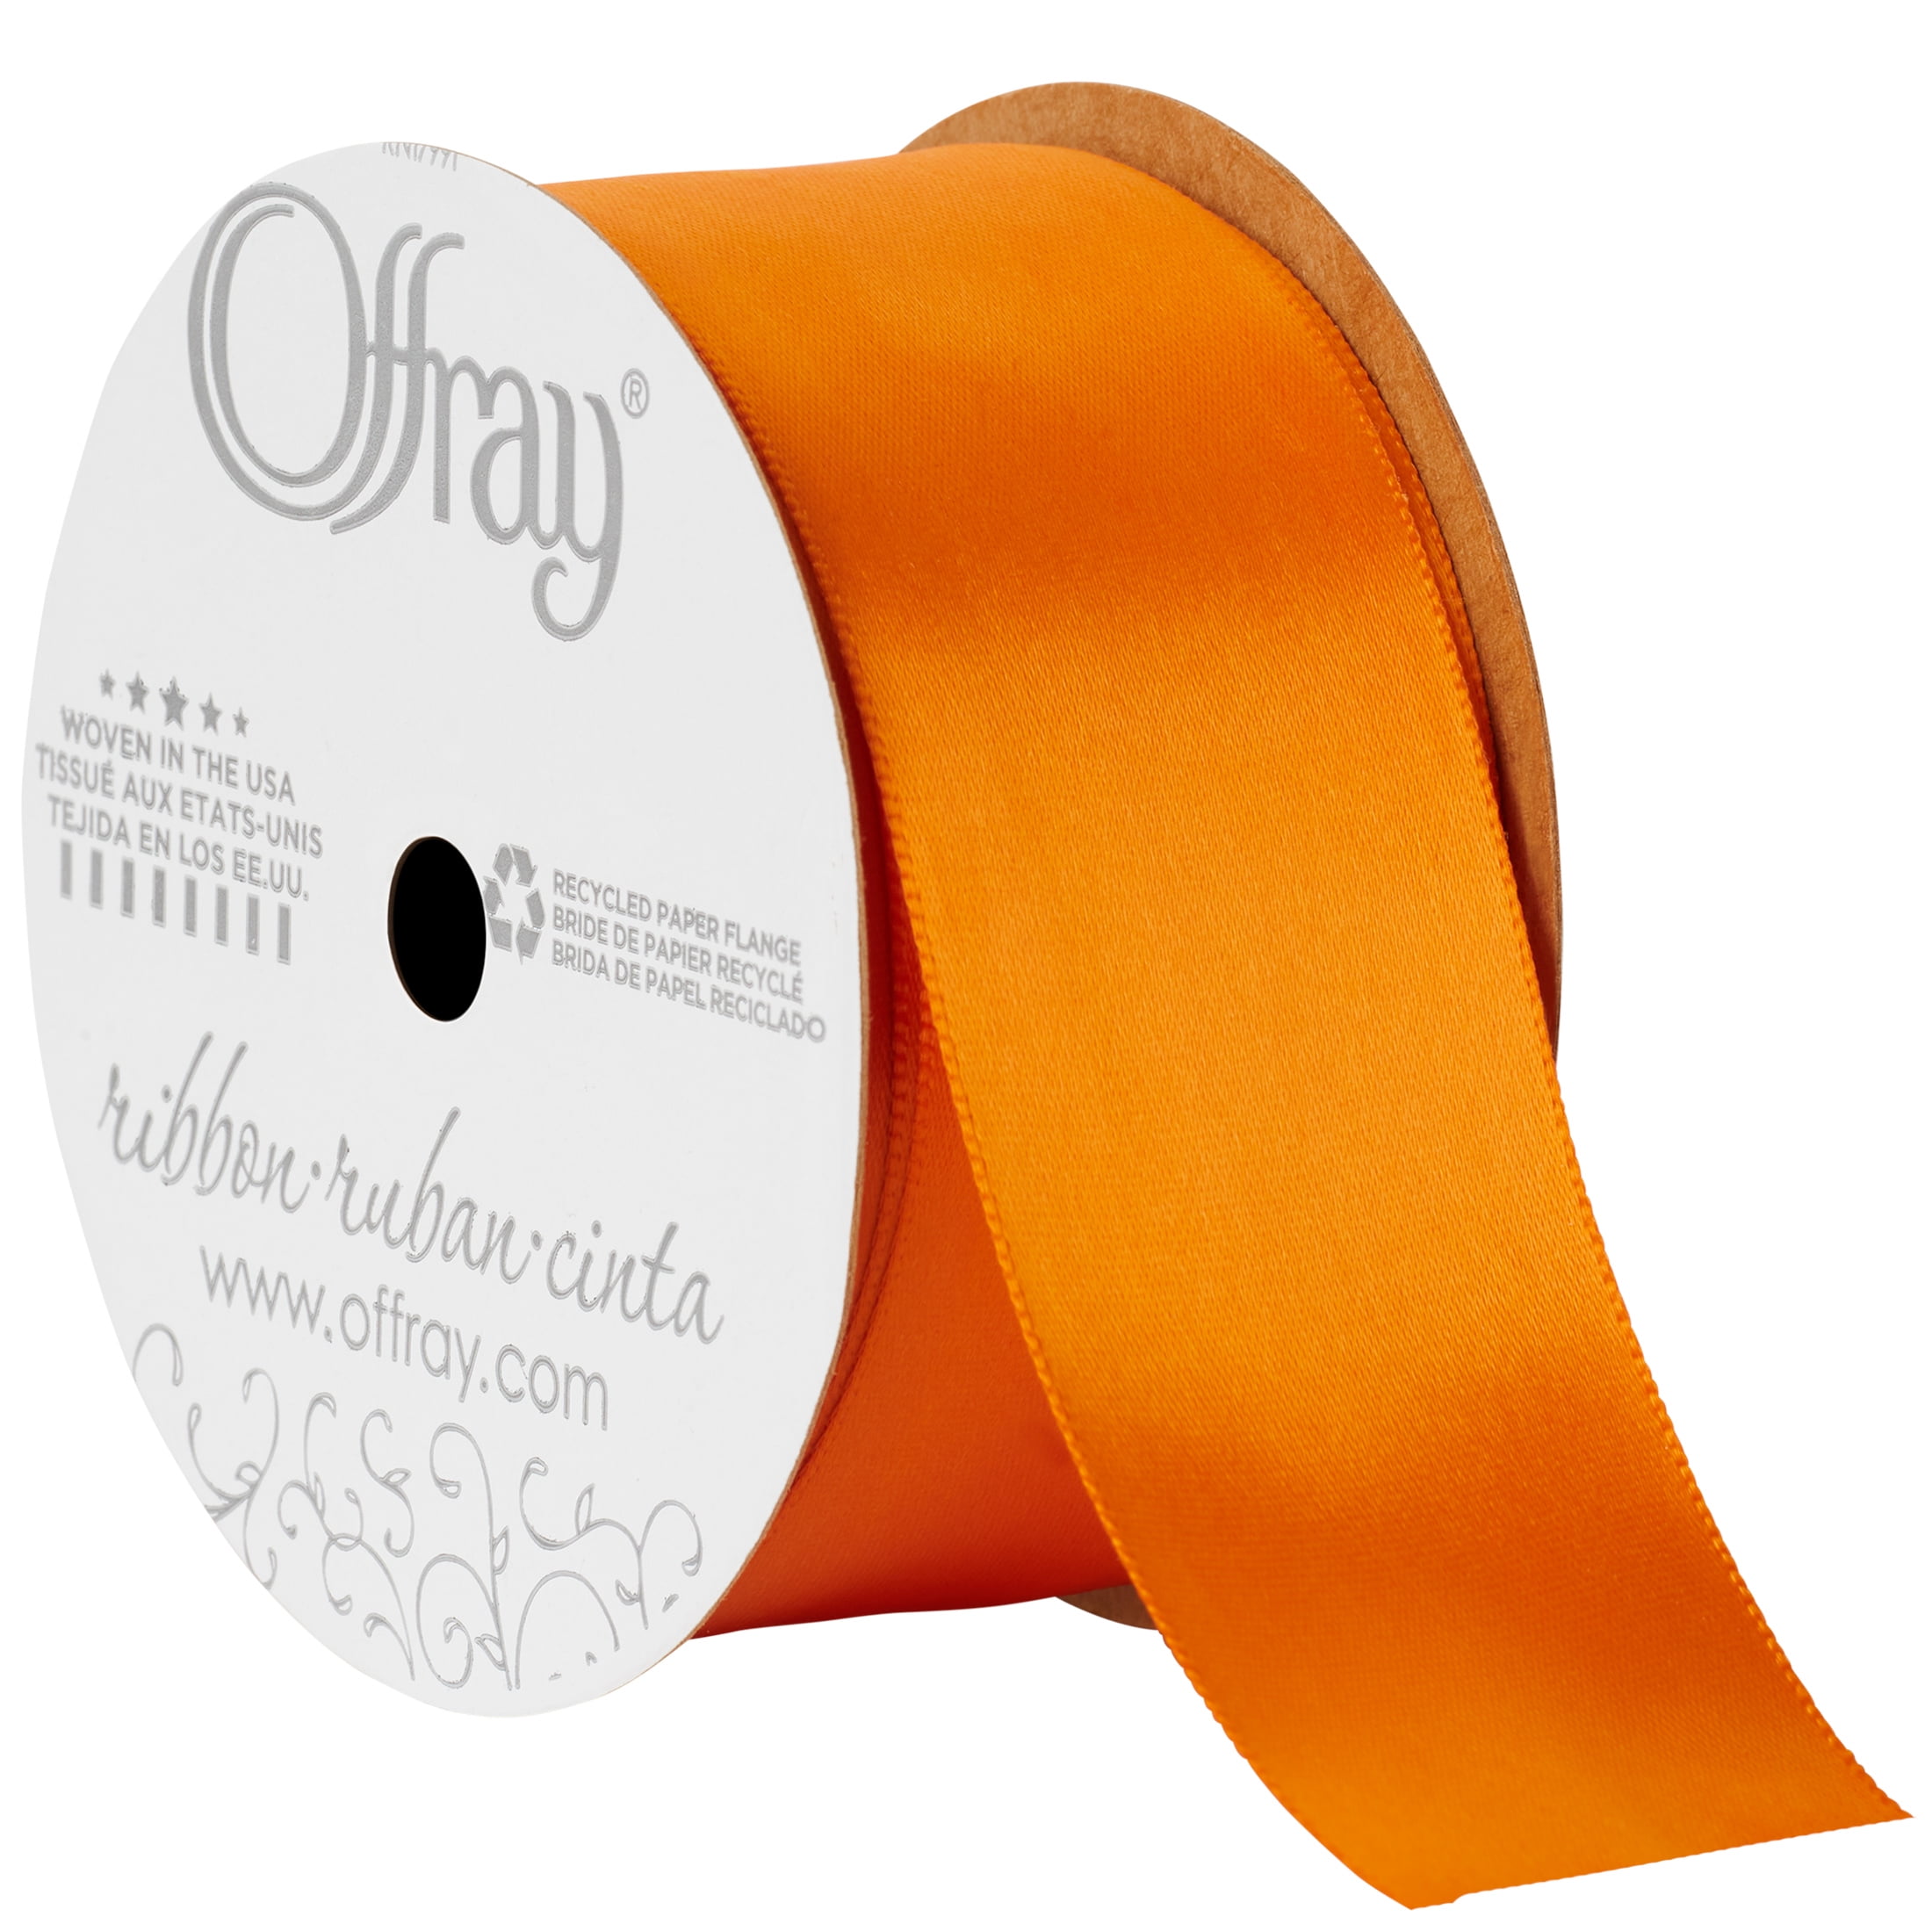 Offray Ribbon, Torrid Orange 1 1/2 inch Single Face Satin Polyester Ribbon, 12 feet